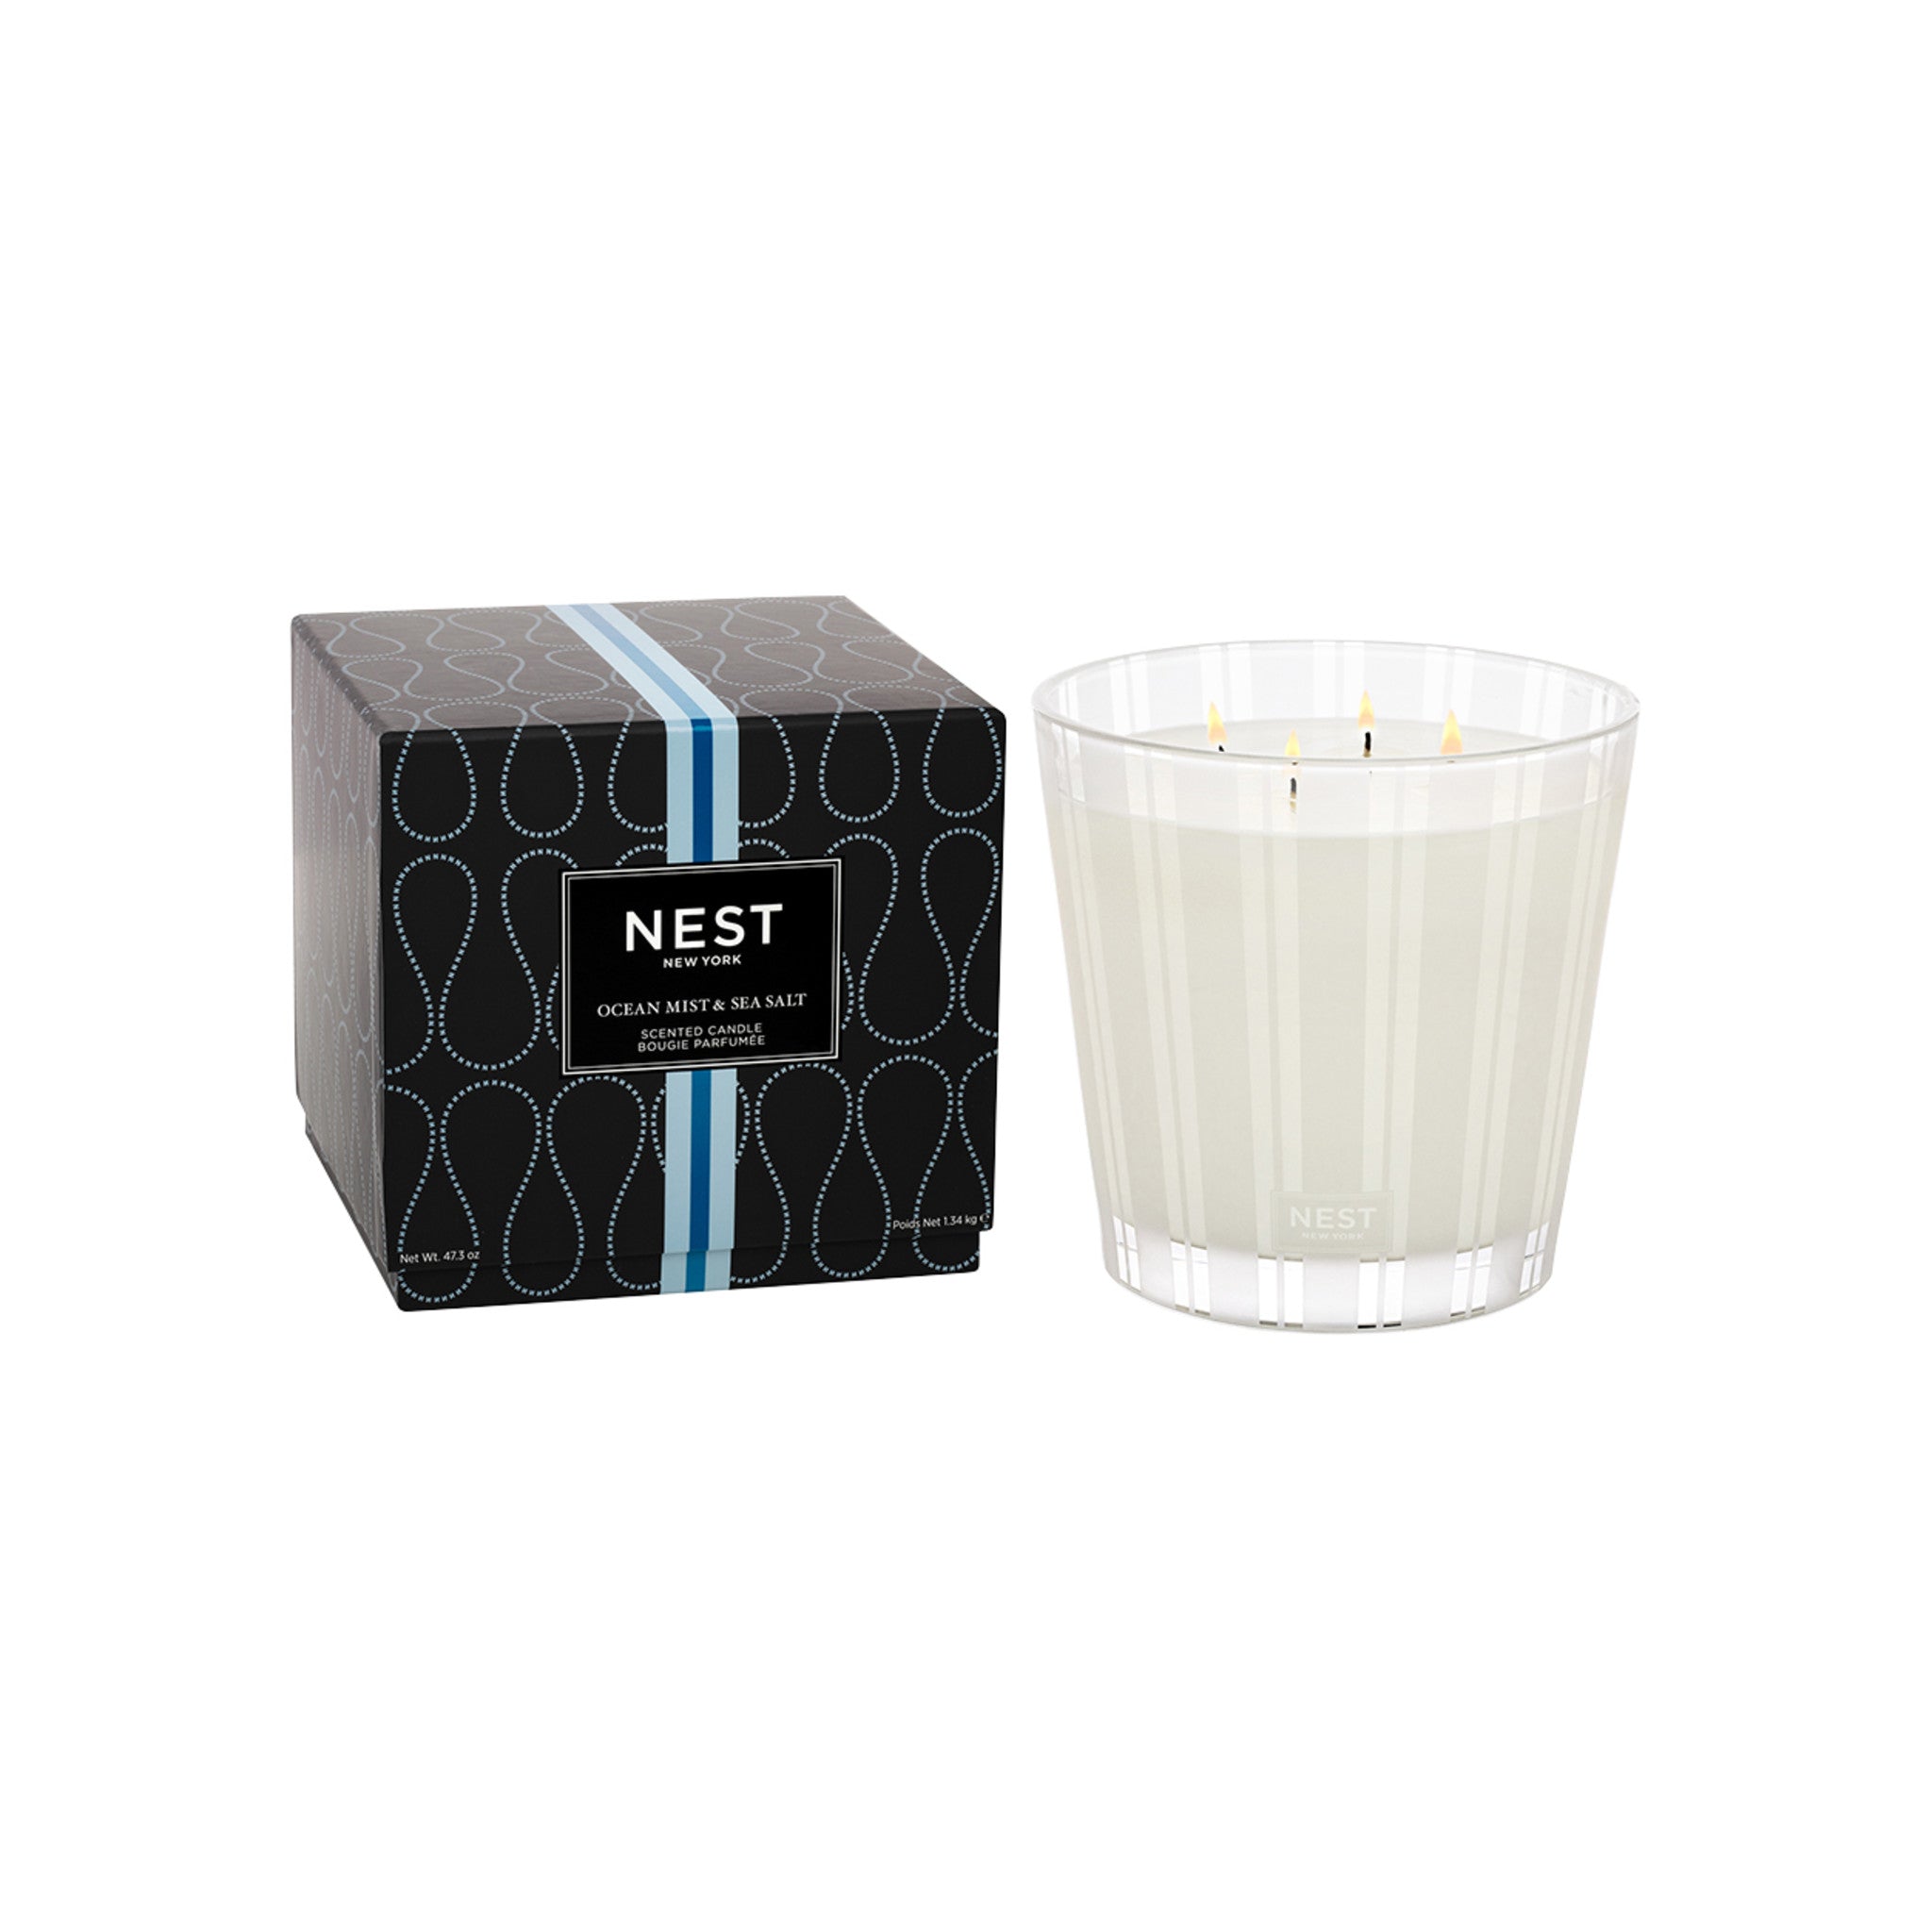 Nest Ocean Mist and Sea Salt Candle Size variant: 43.7 oz (Luxury) main image.